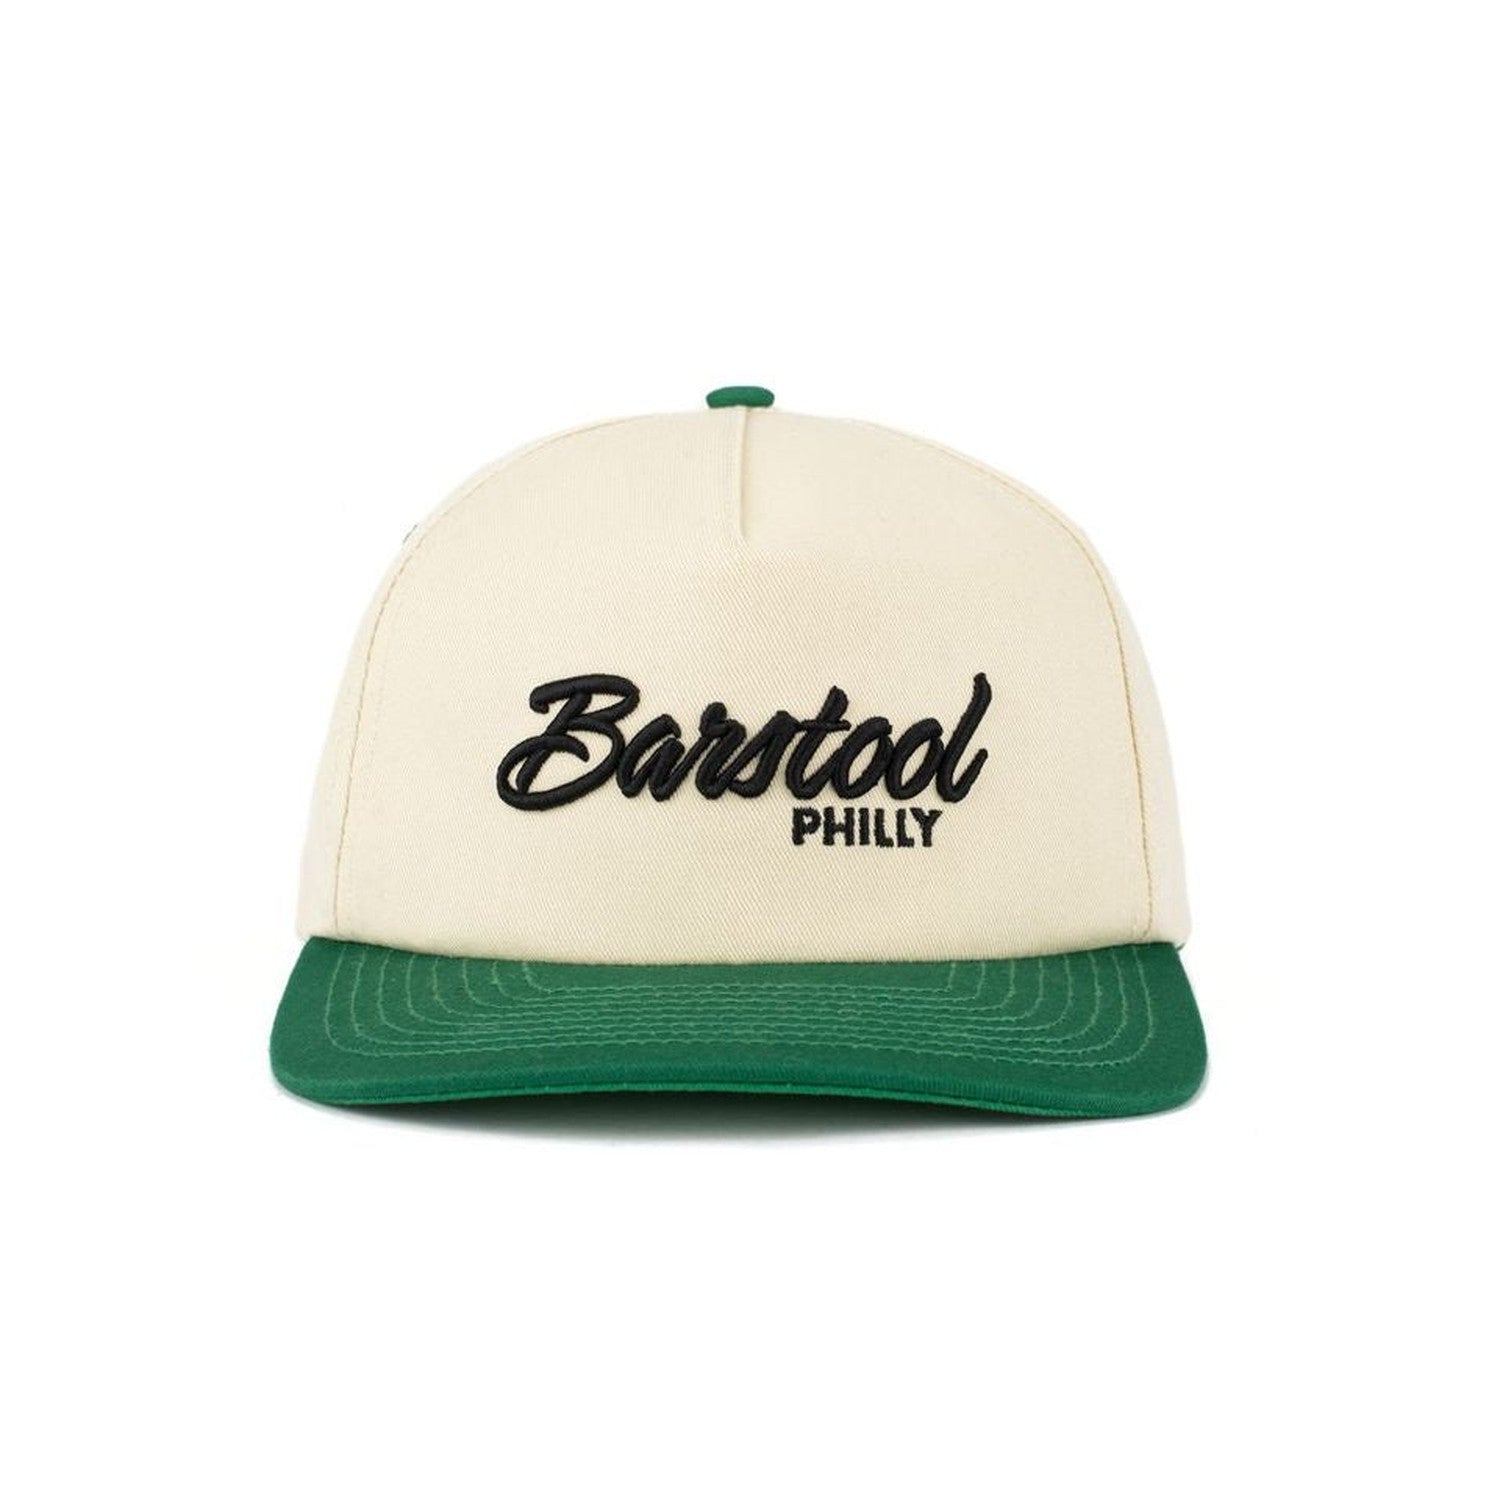 Barstool Philly Retro Snapback Hat